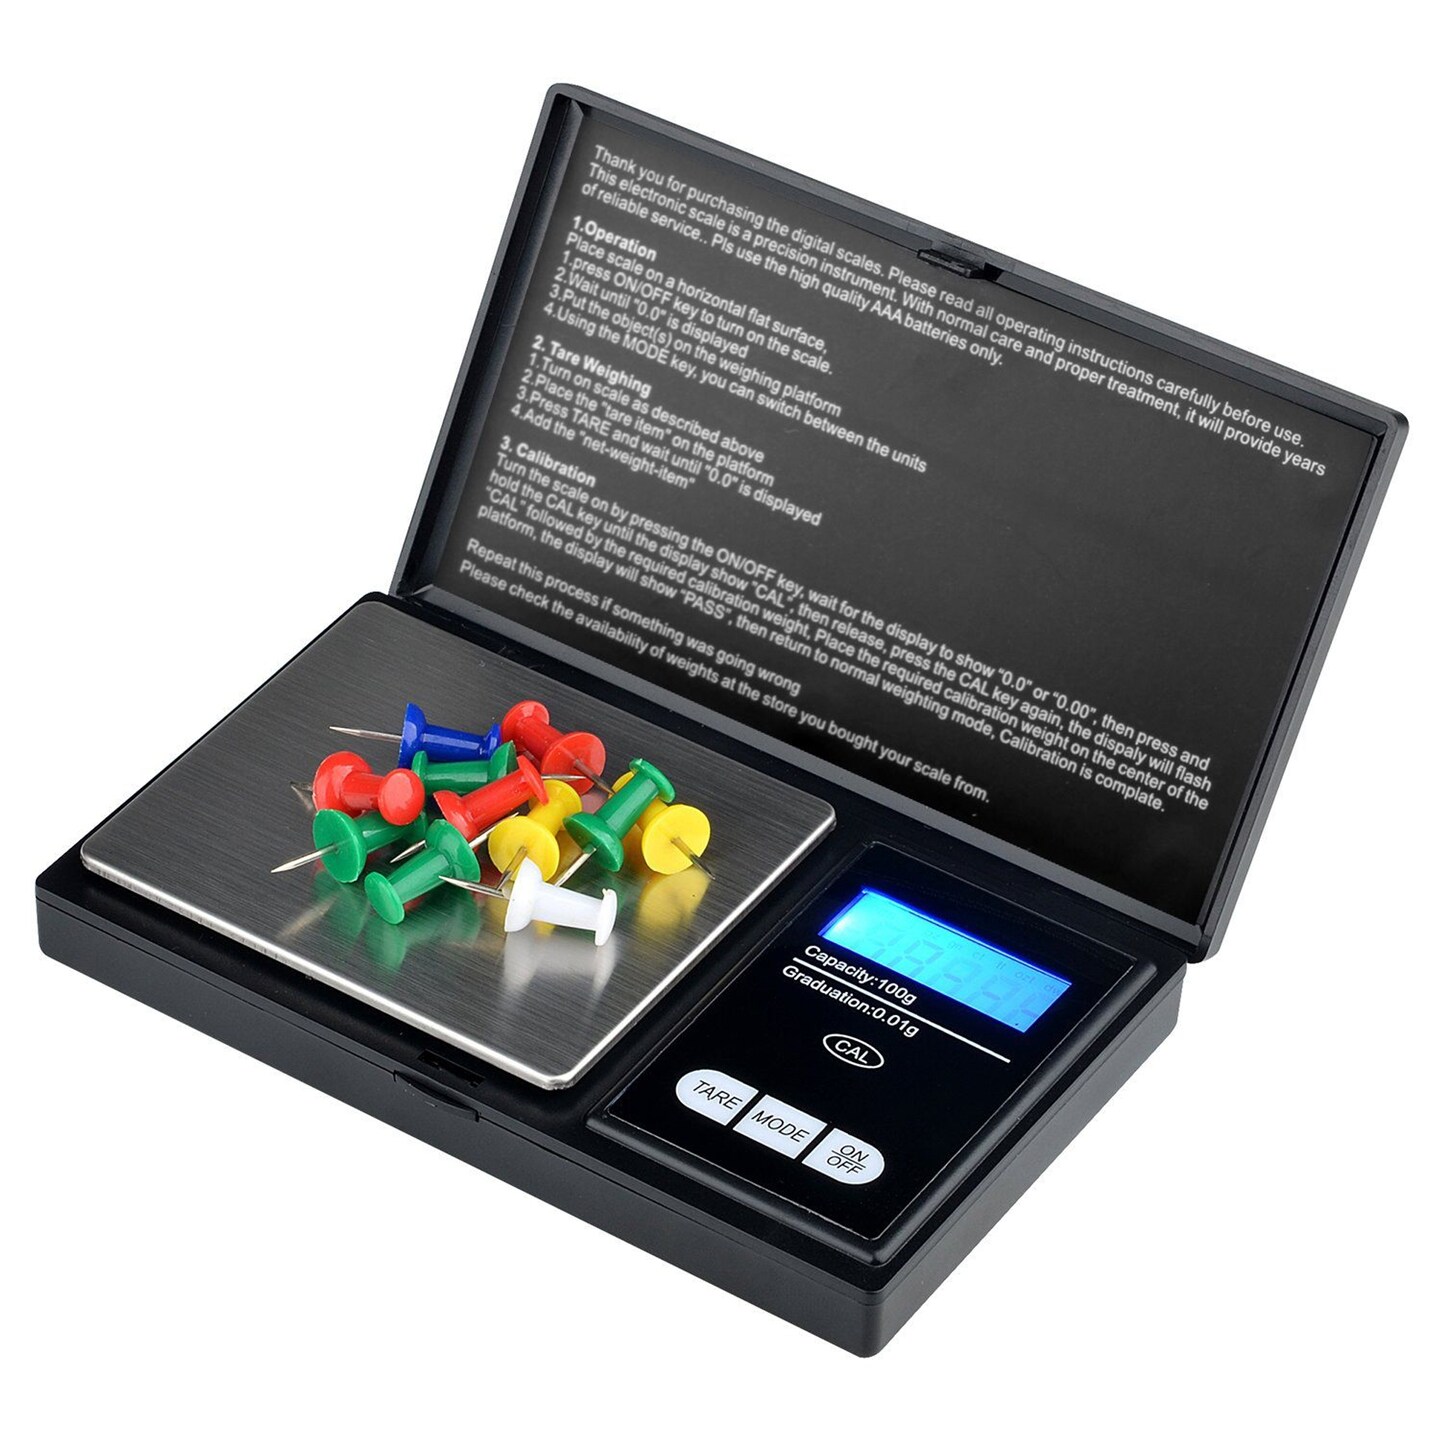 Electronic Digital Pocket Scale 0.01g Precision Mini Jewelry